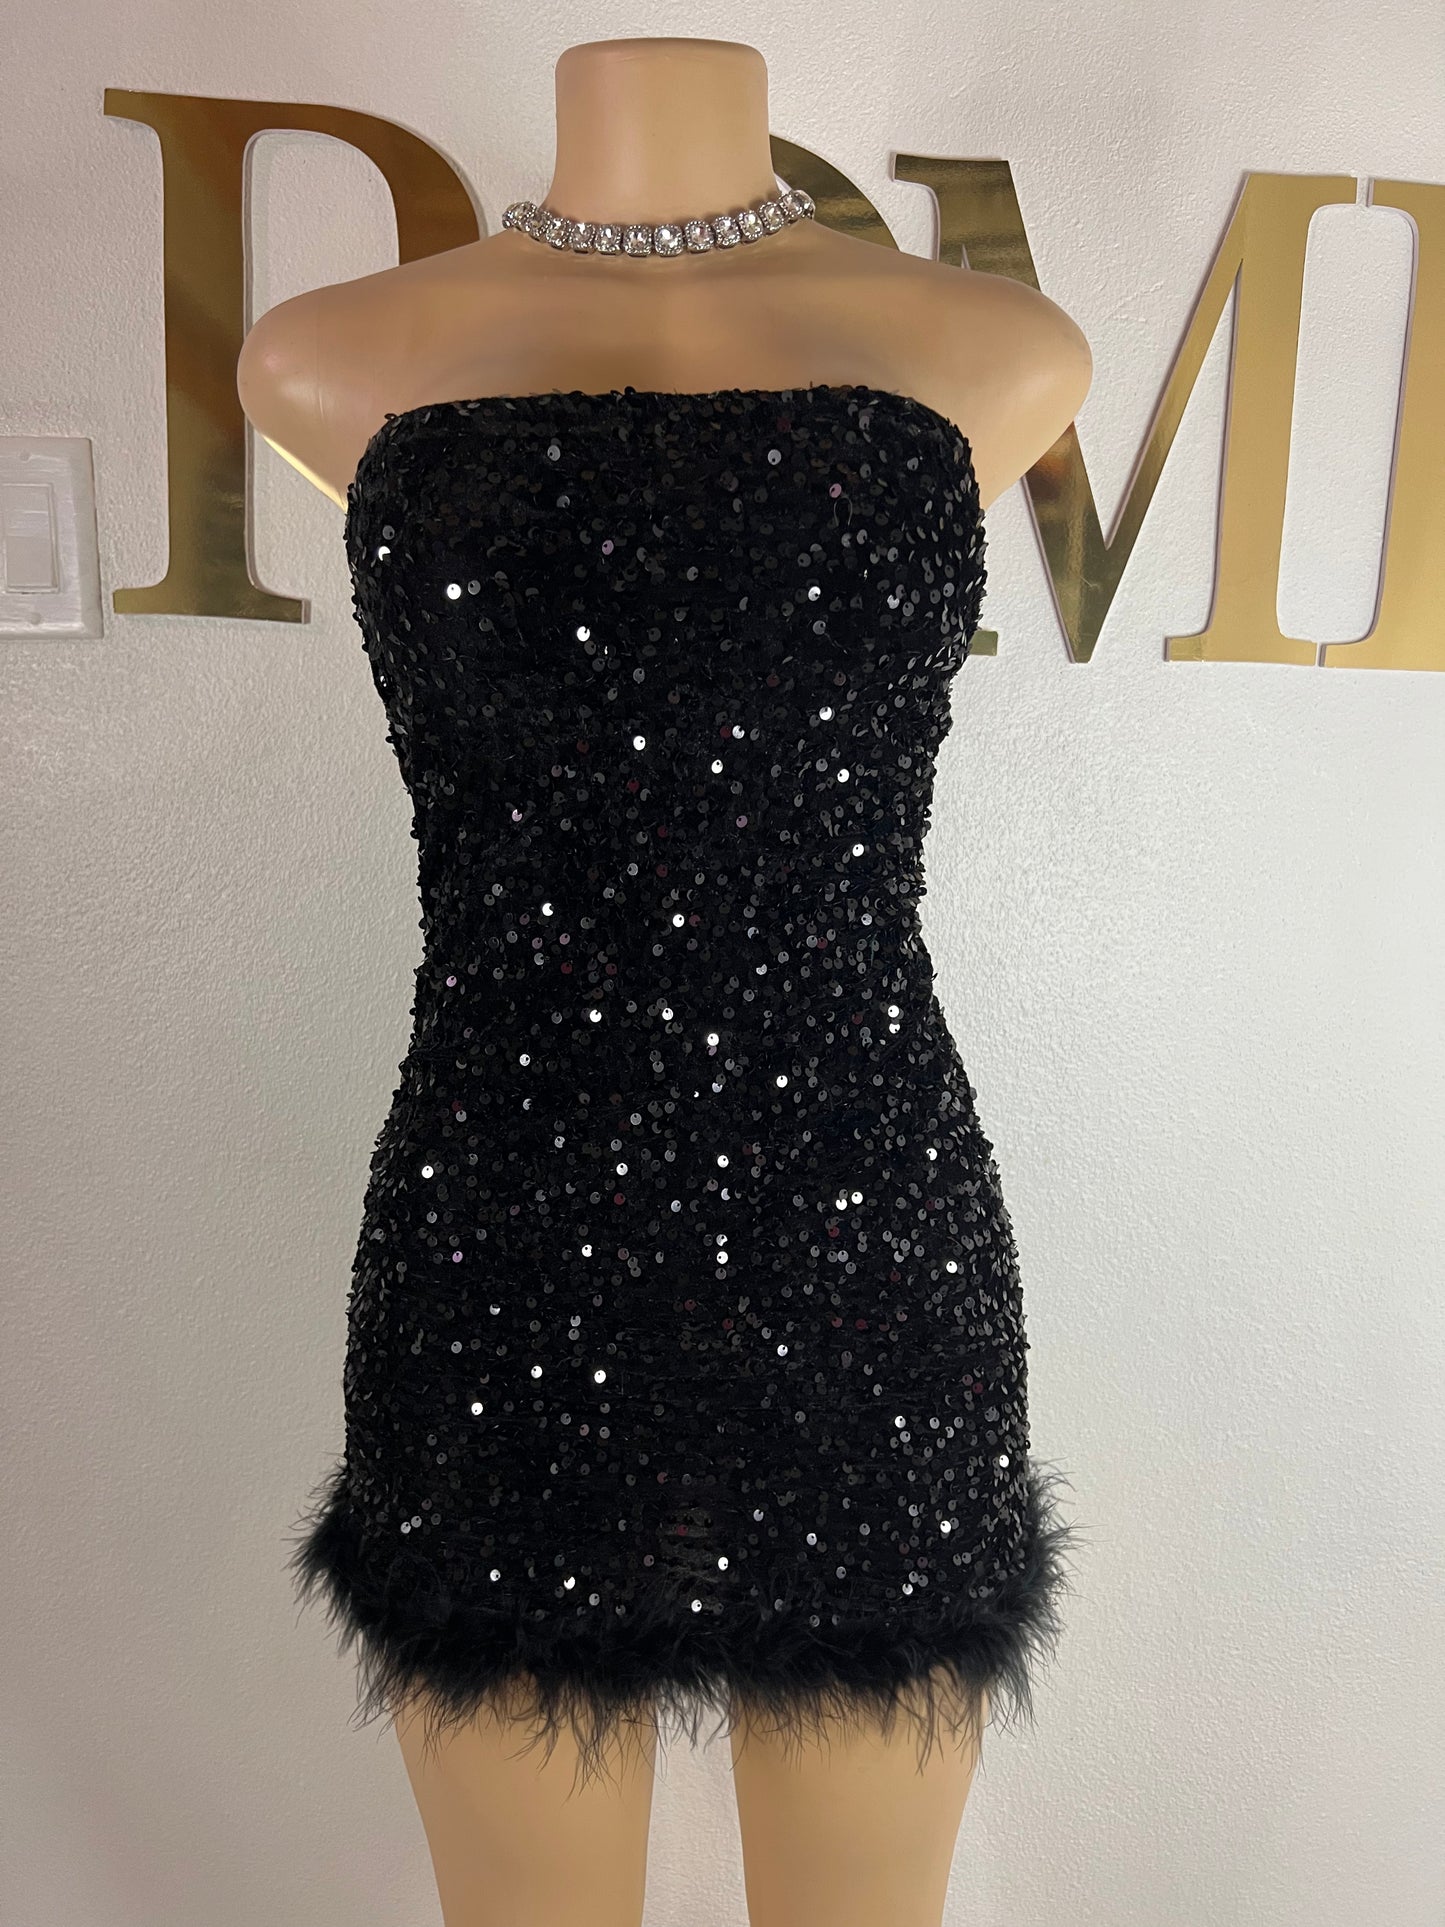 Holly Molly Fur Dress (Black)